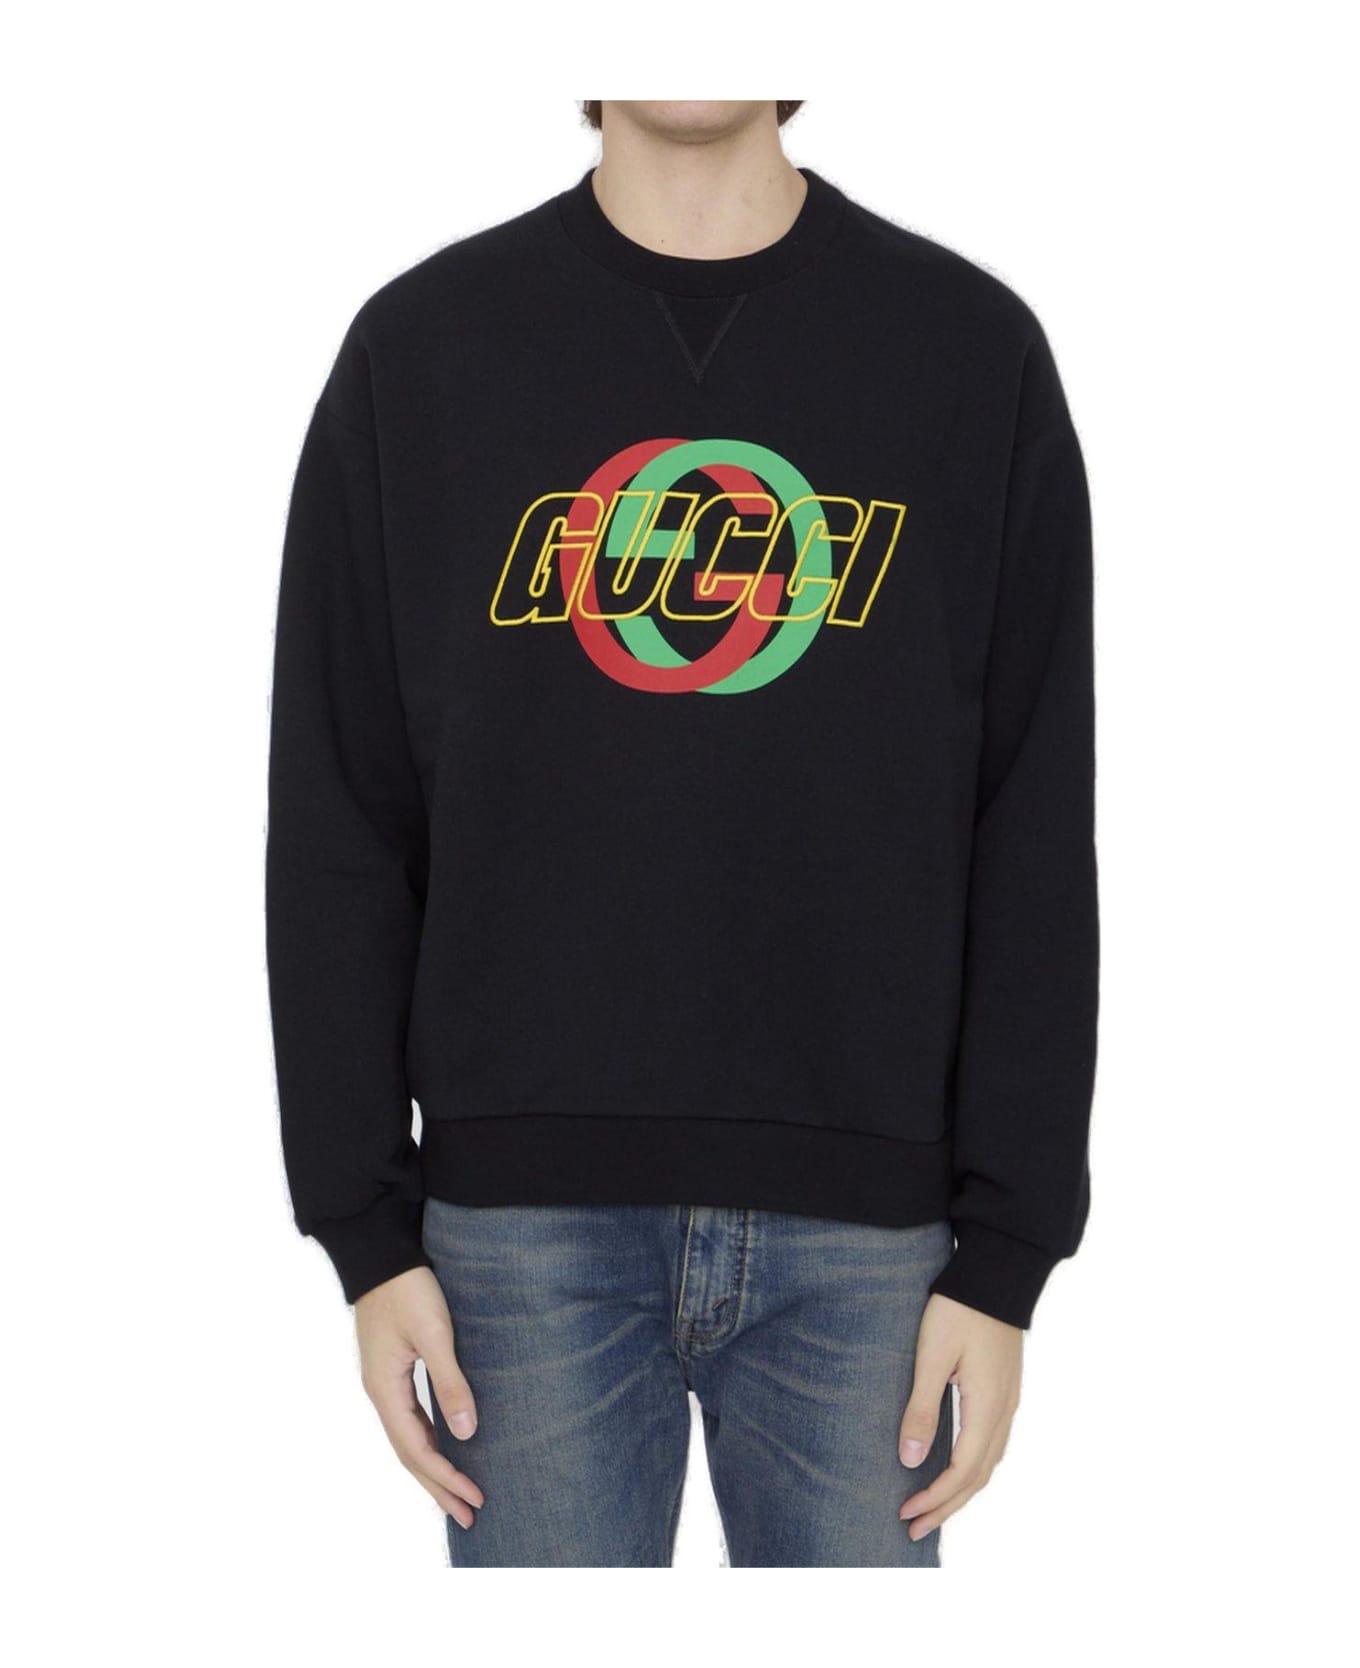 Gucci Logo Printed Crewneck Sweatshirt - Black Mix